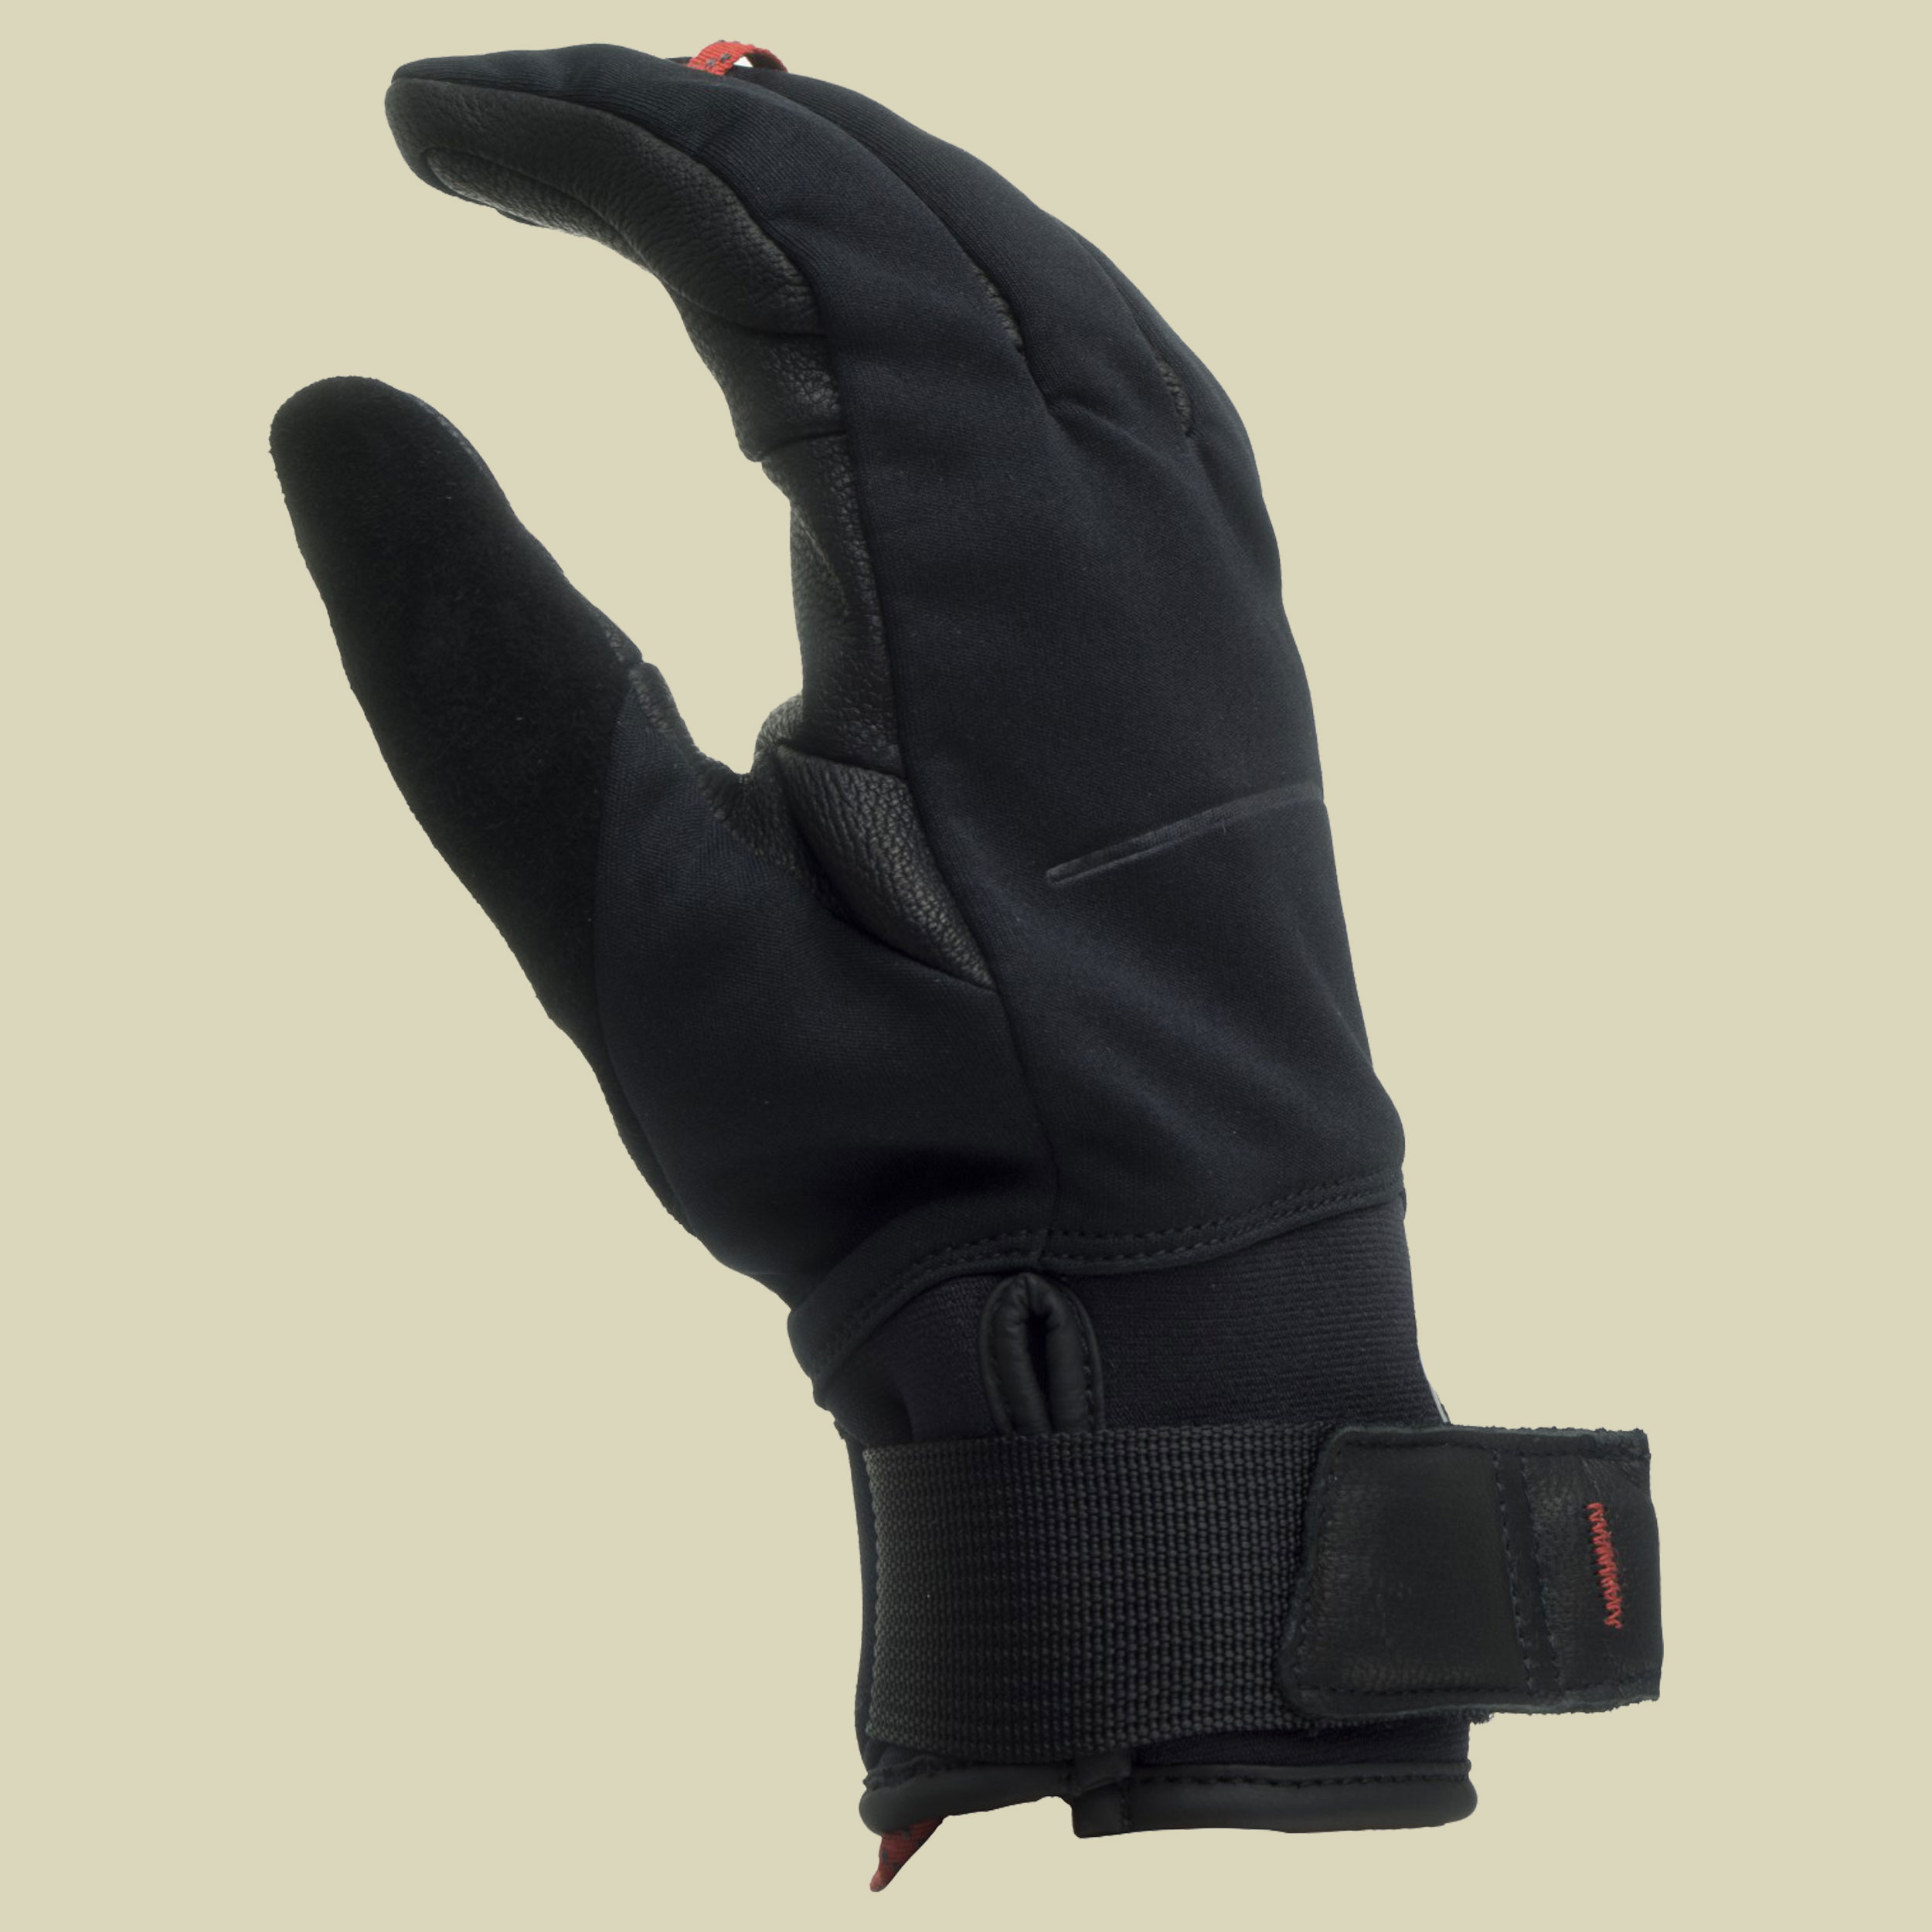 Astro Guide Glove Größe 12 Farbe black